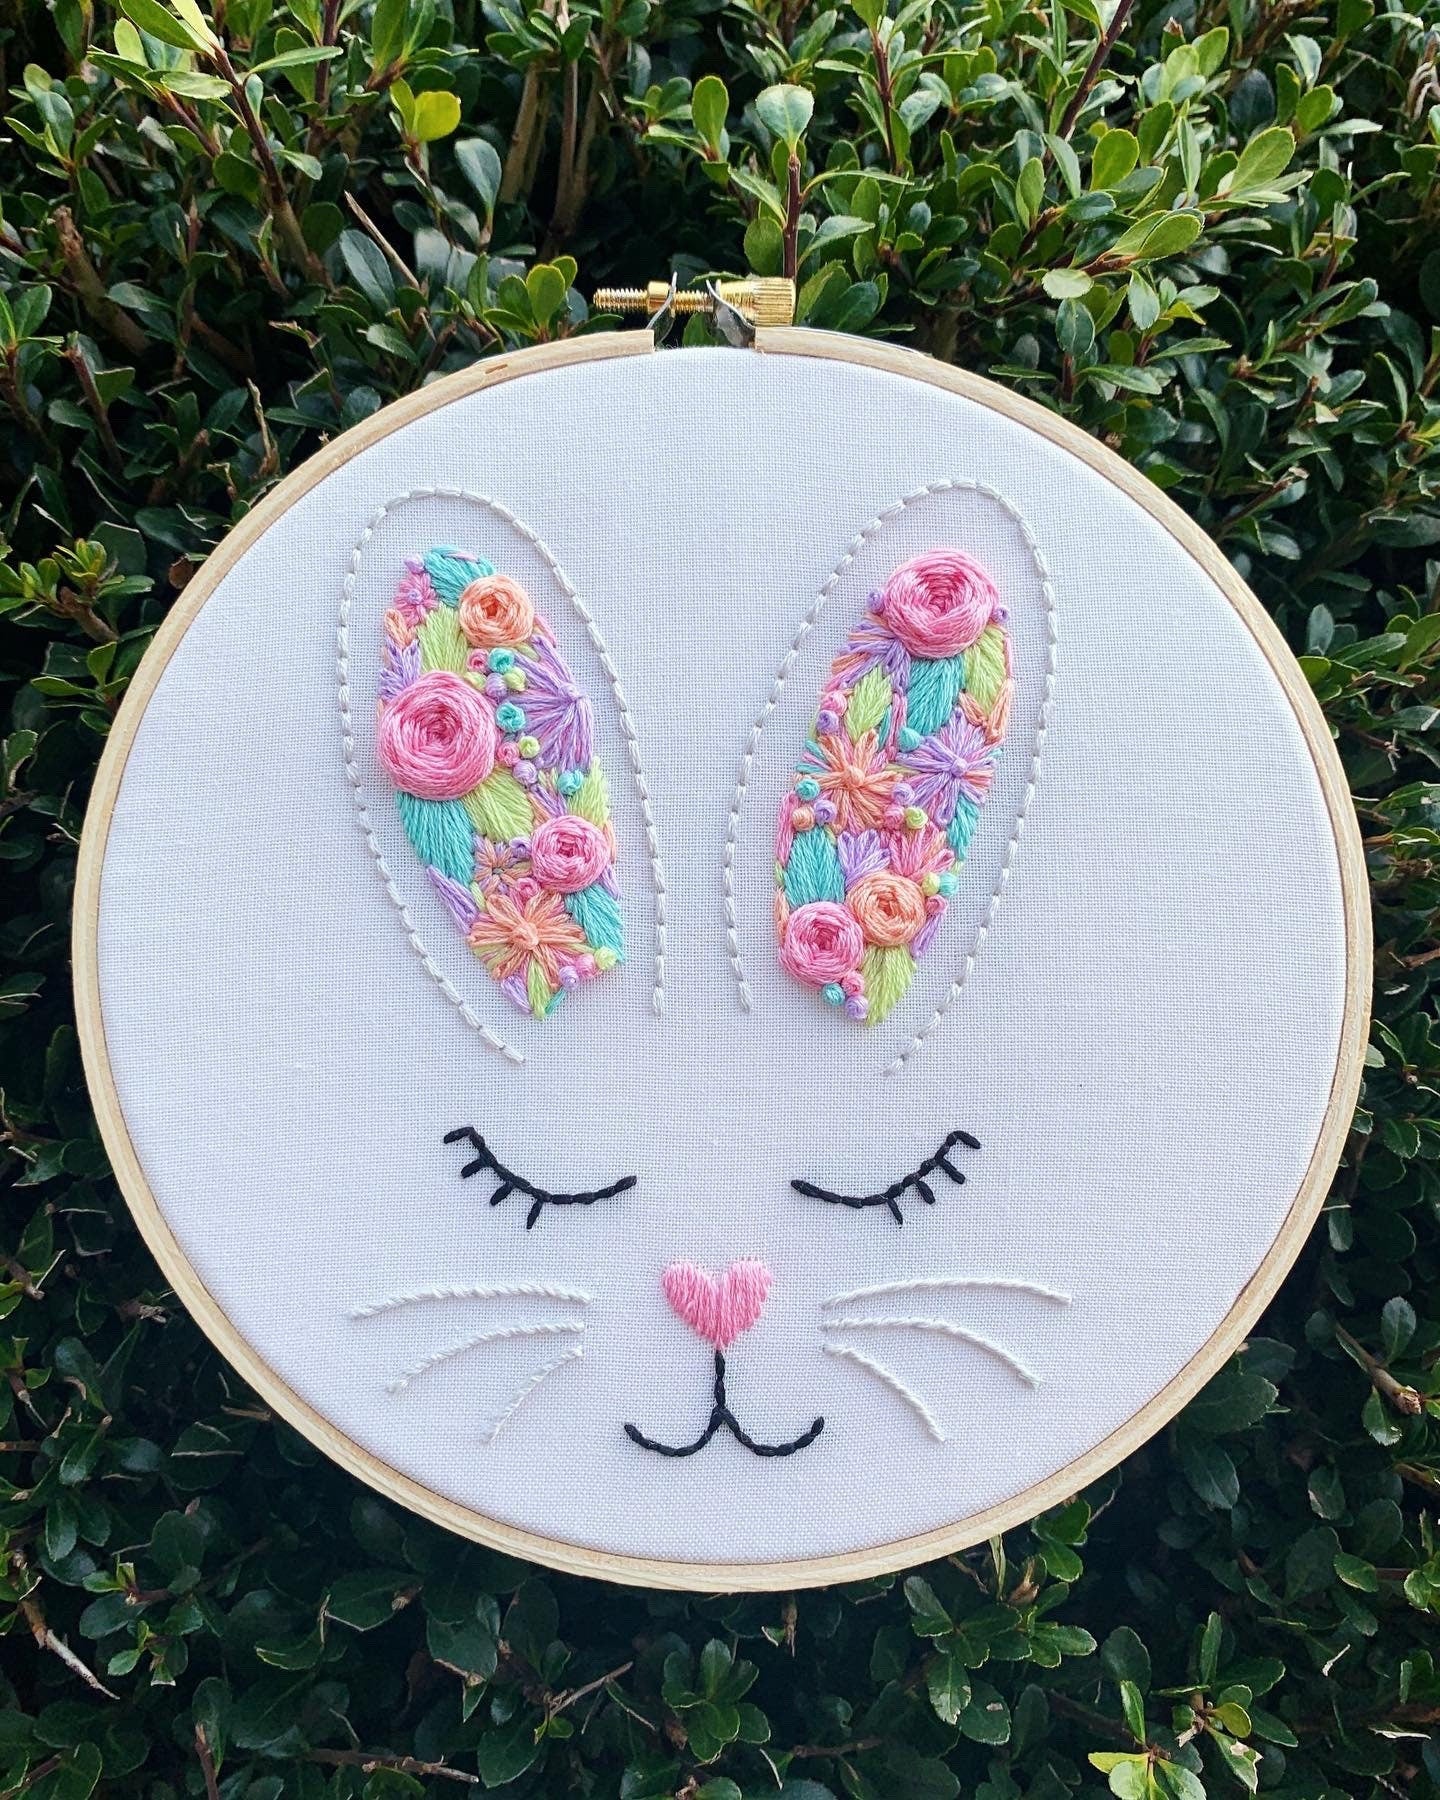 PDF Pattern - Hoppy Easter Bunny Trio Bundle, Beginner/Intermediate Embroidery Patterns